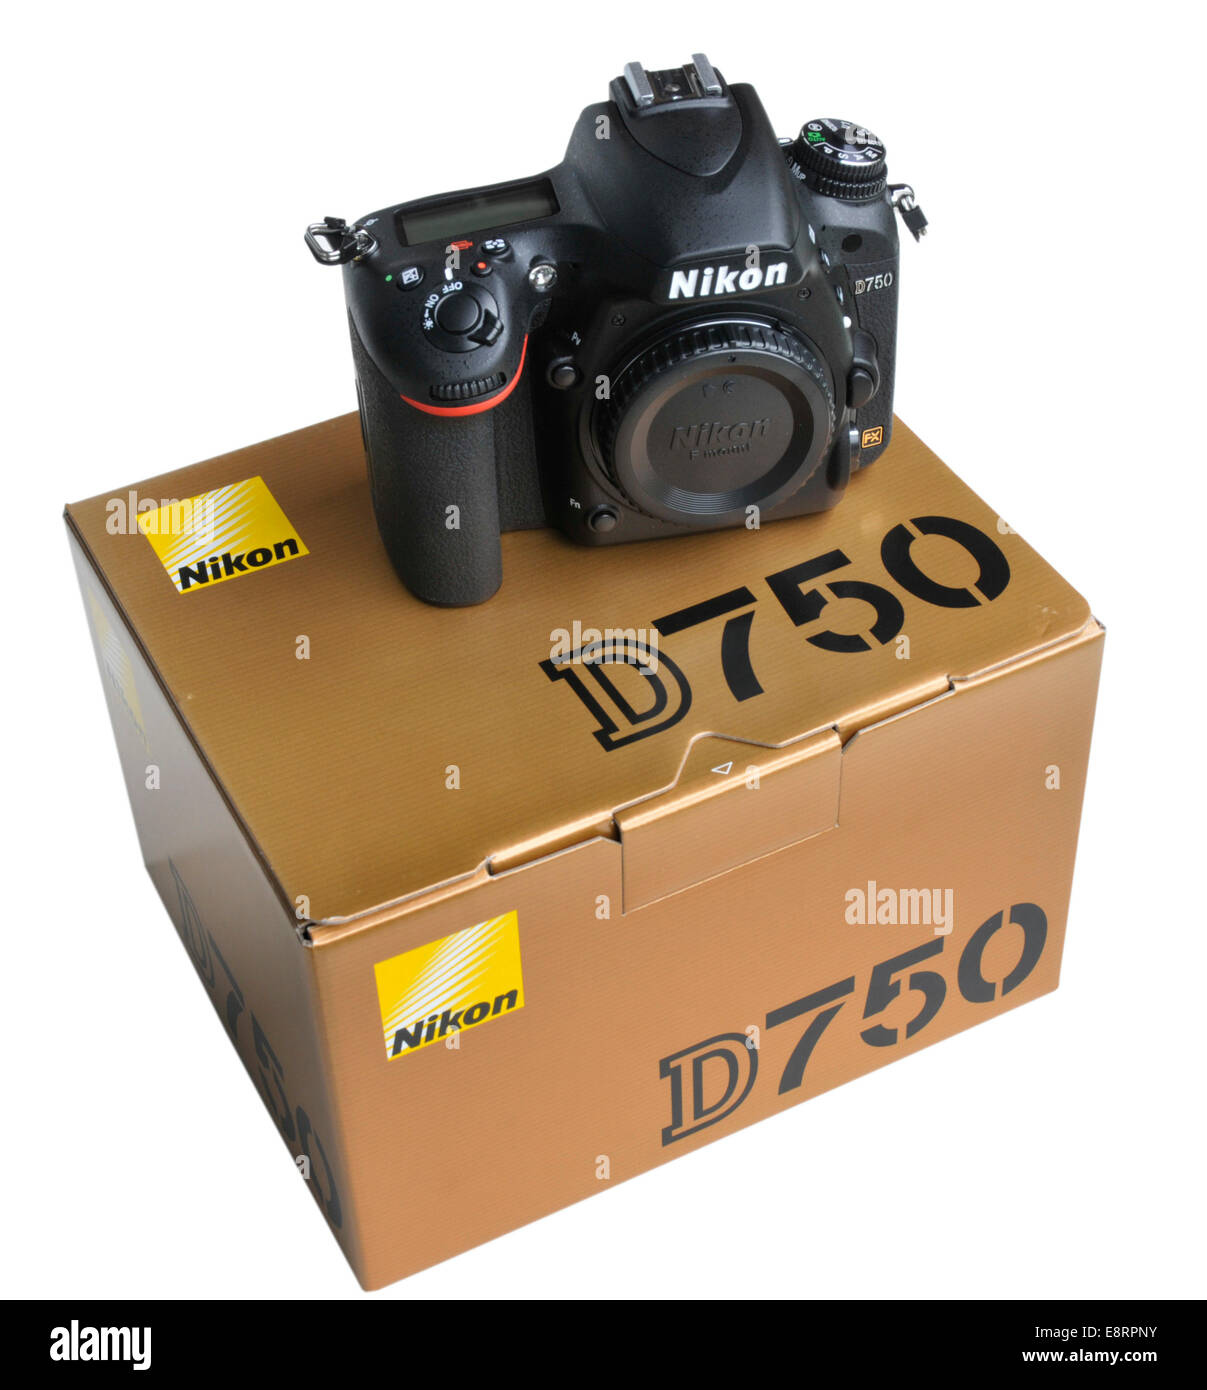 Nuovo di zecca Nikon D750 fotocamera Foto Stock